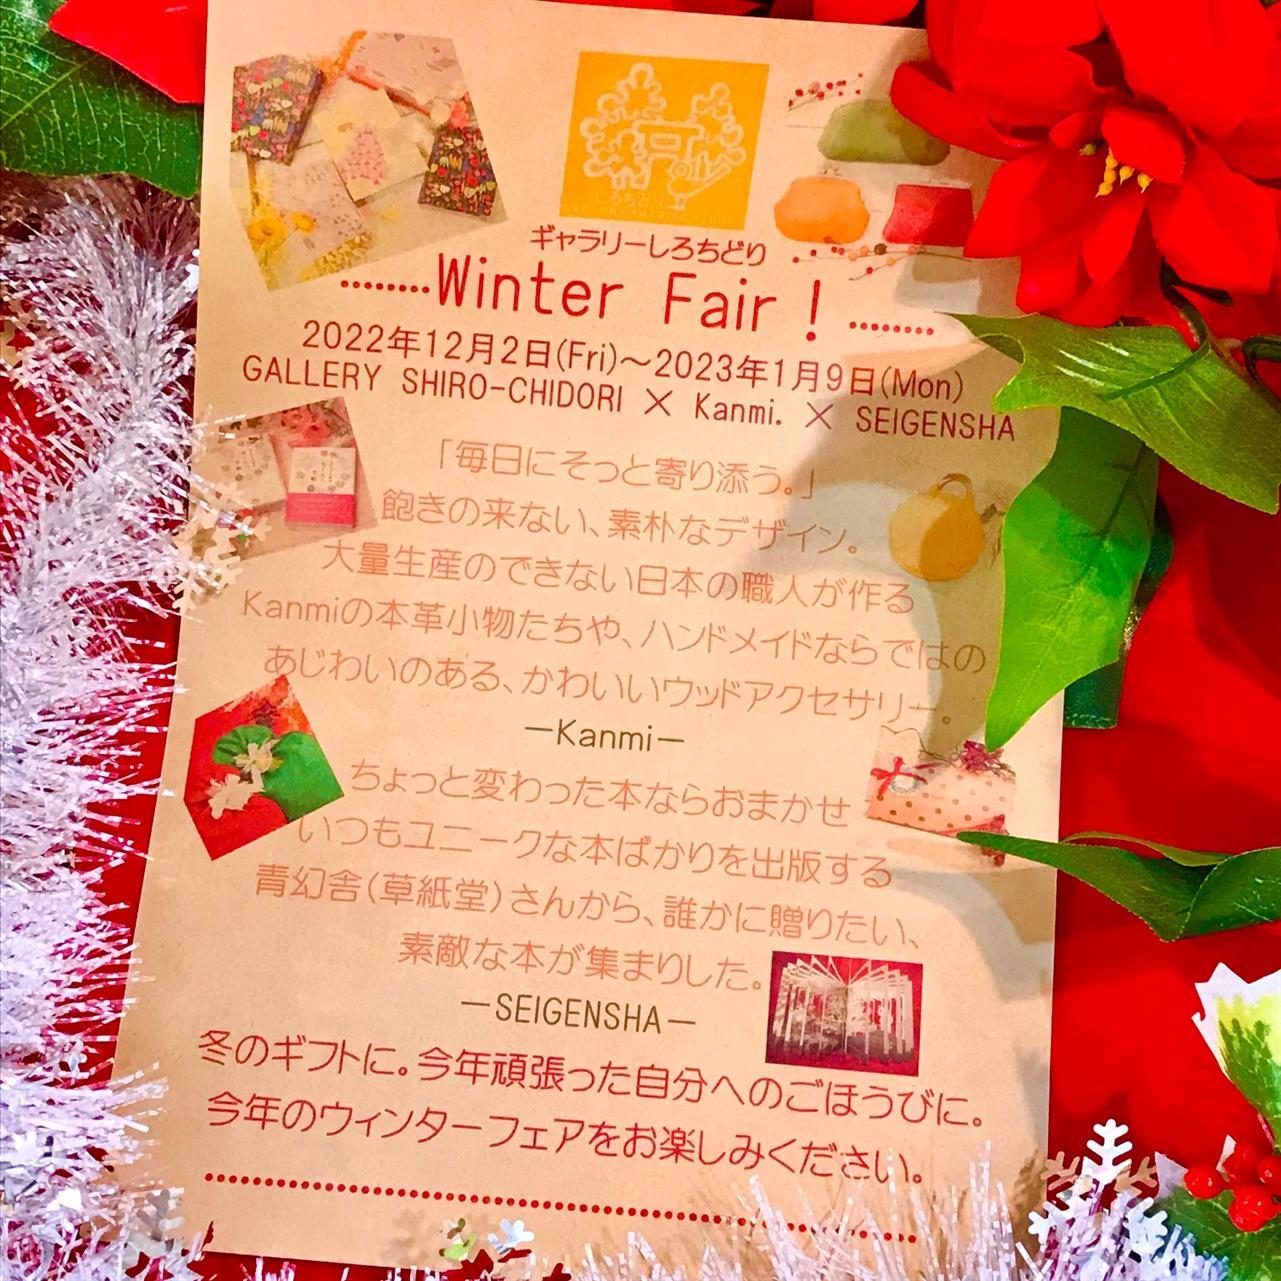 “Winter Fair”本日より開催です♪